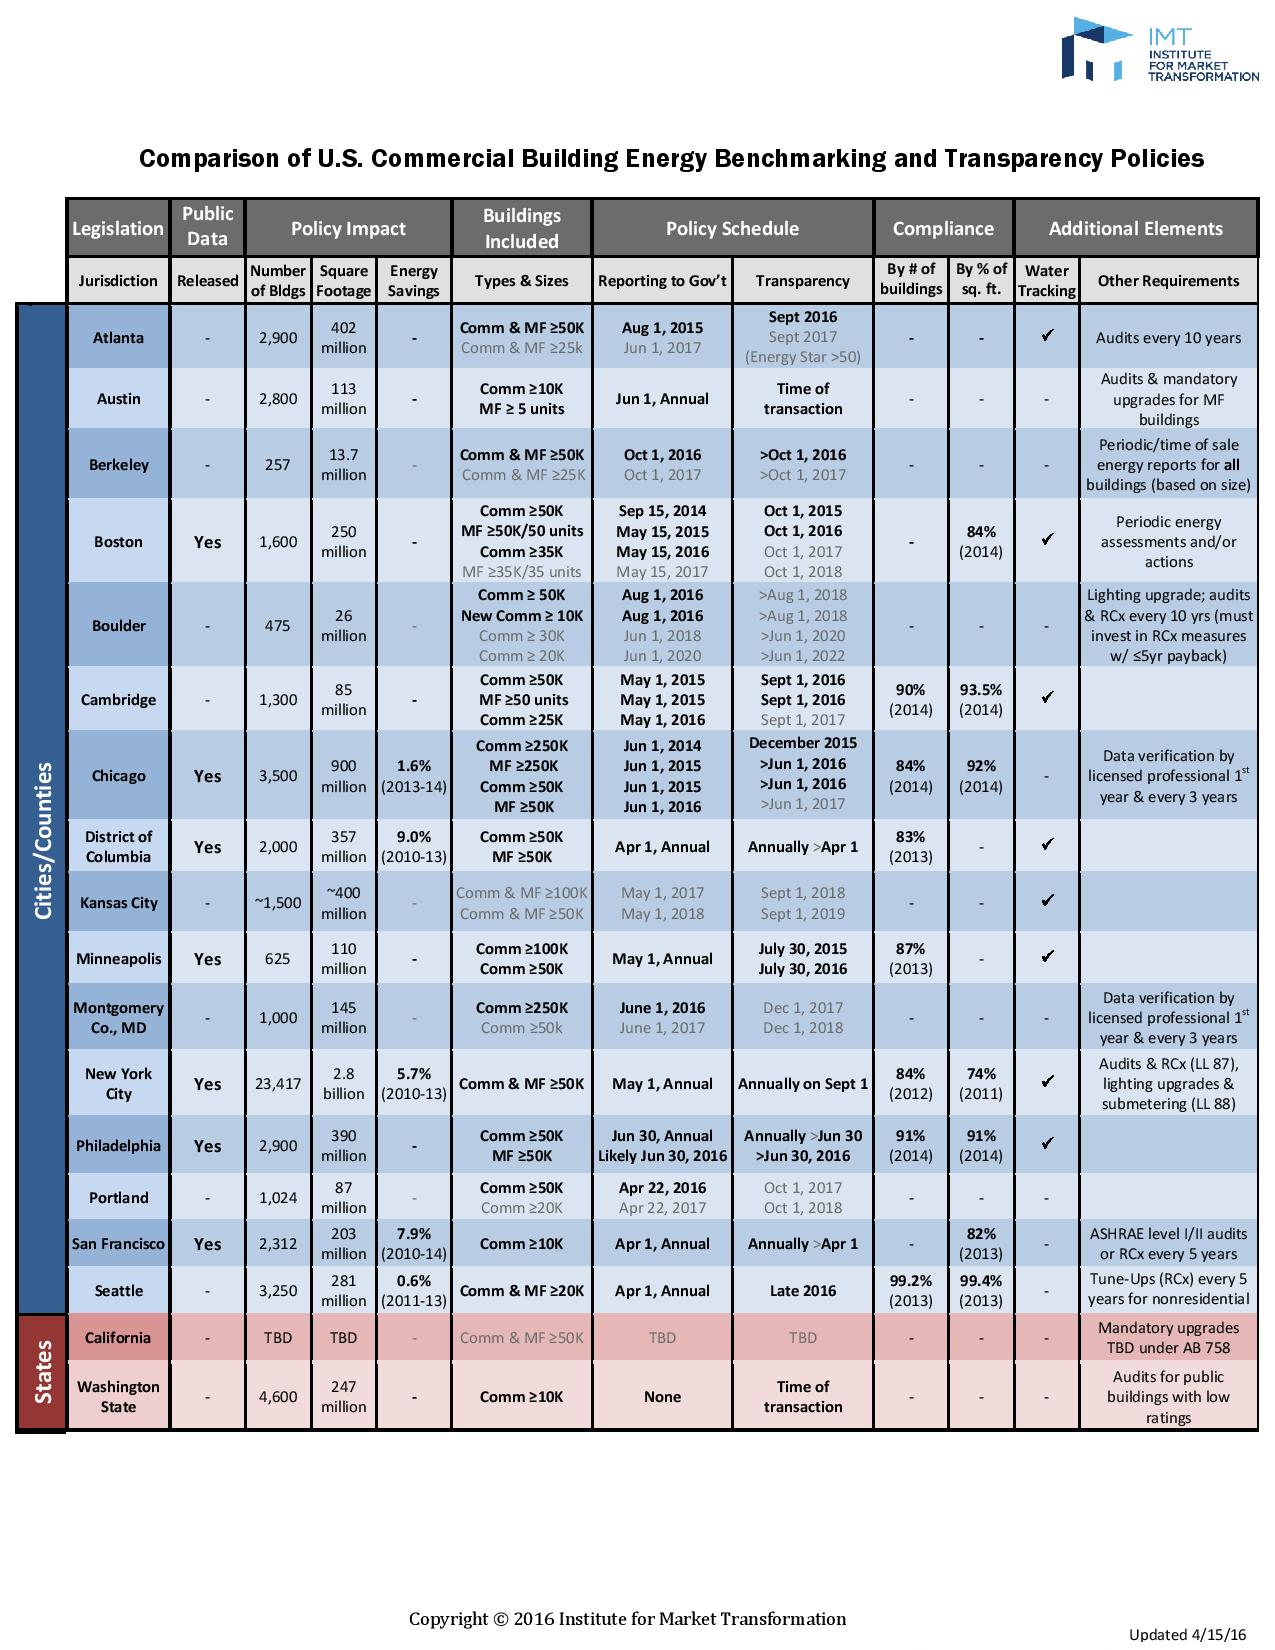 U.S. Commercial Building Policy Comparison Matrix